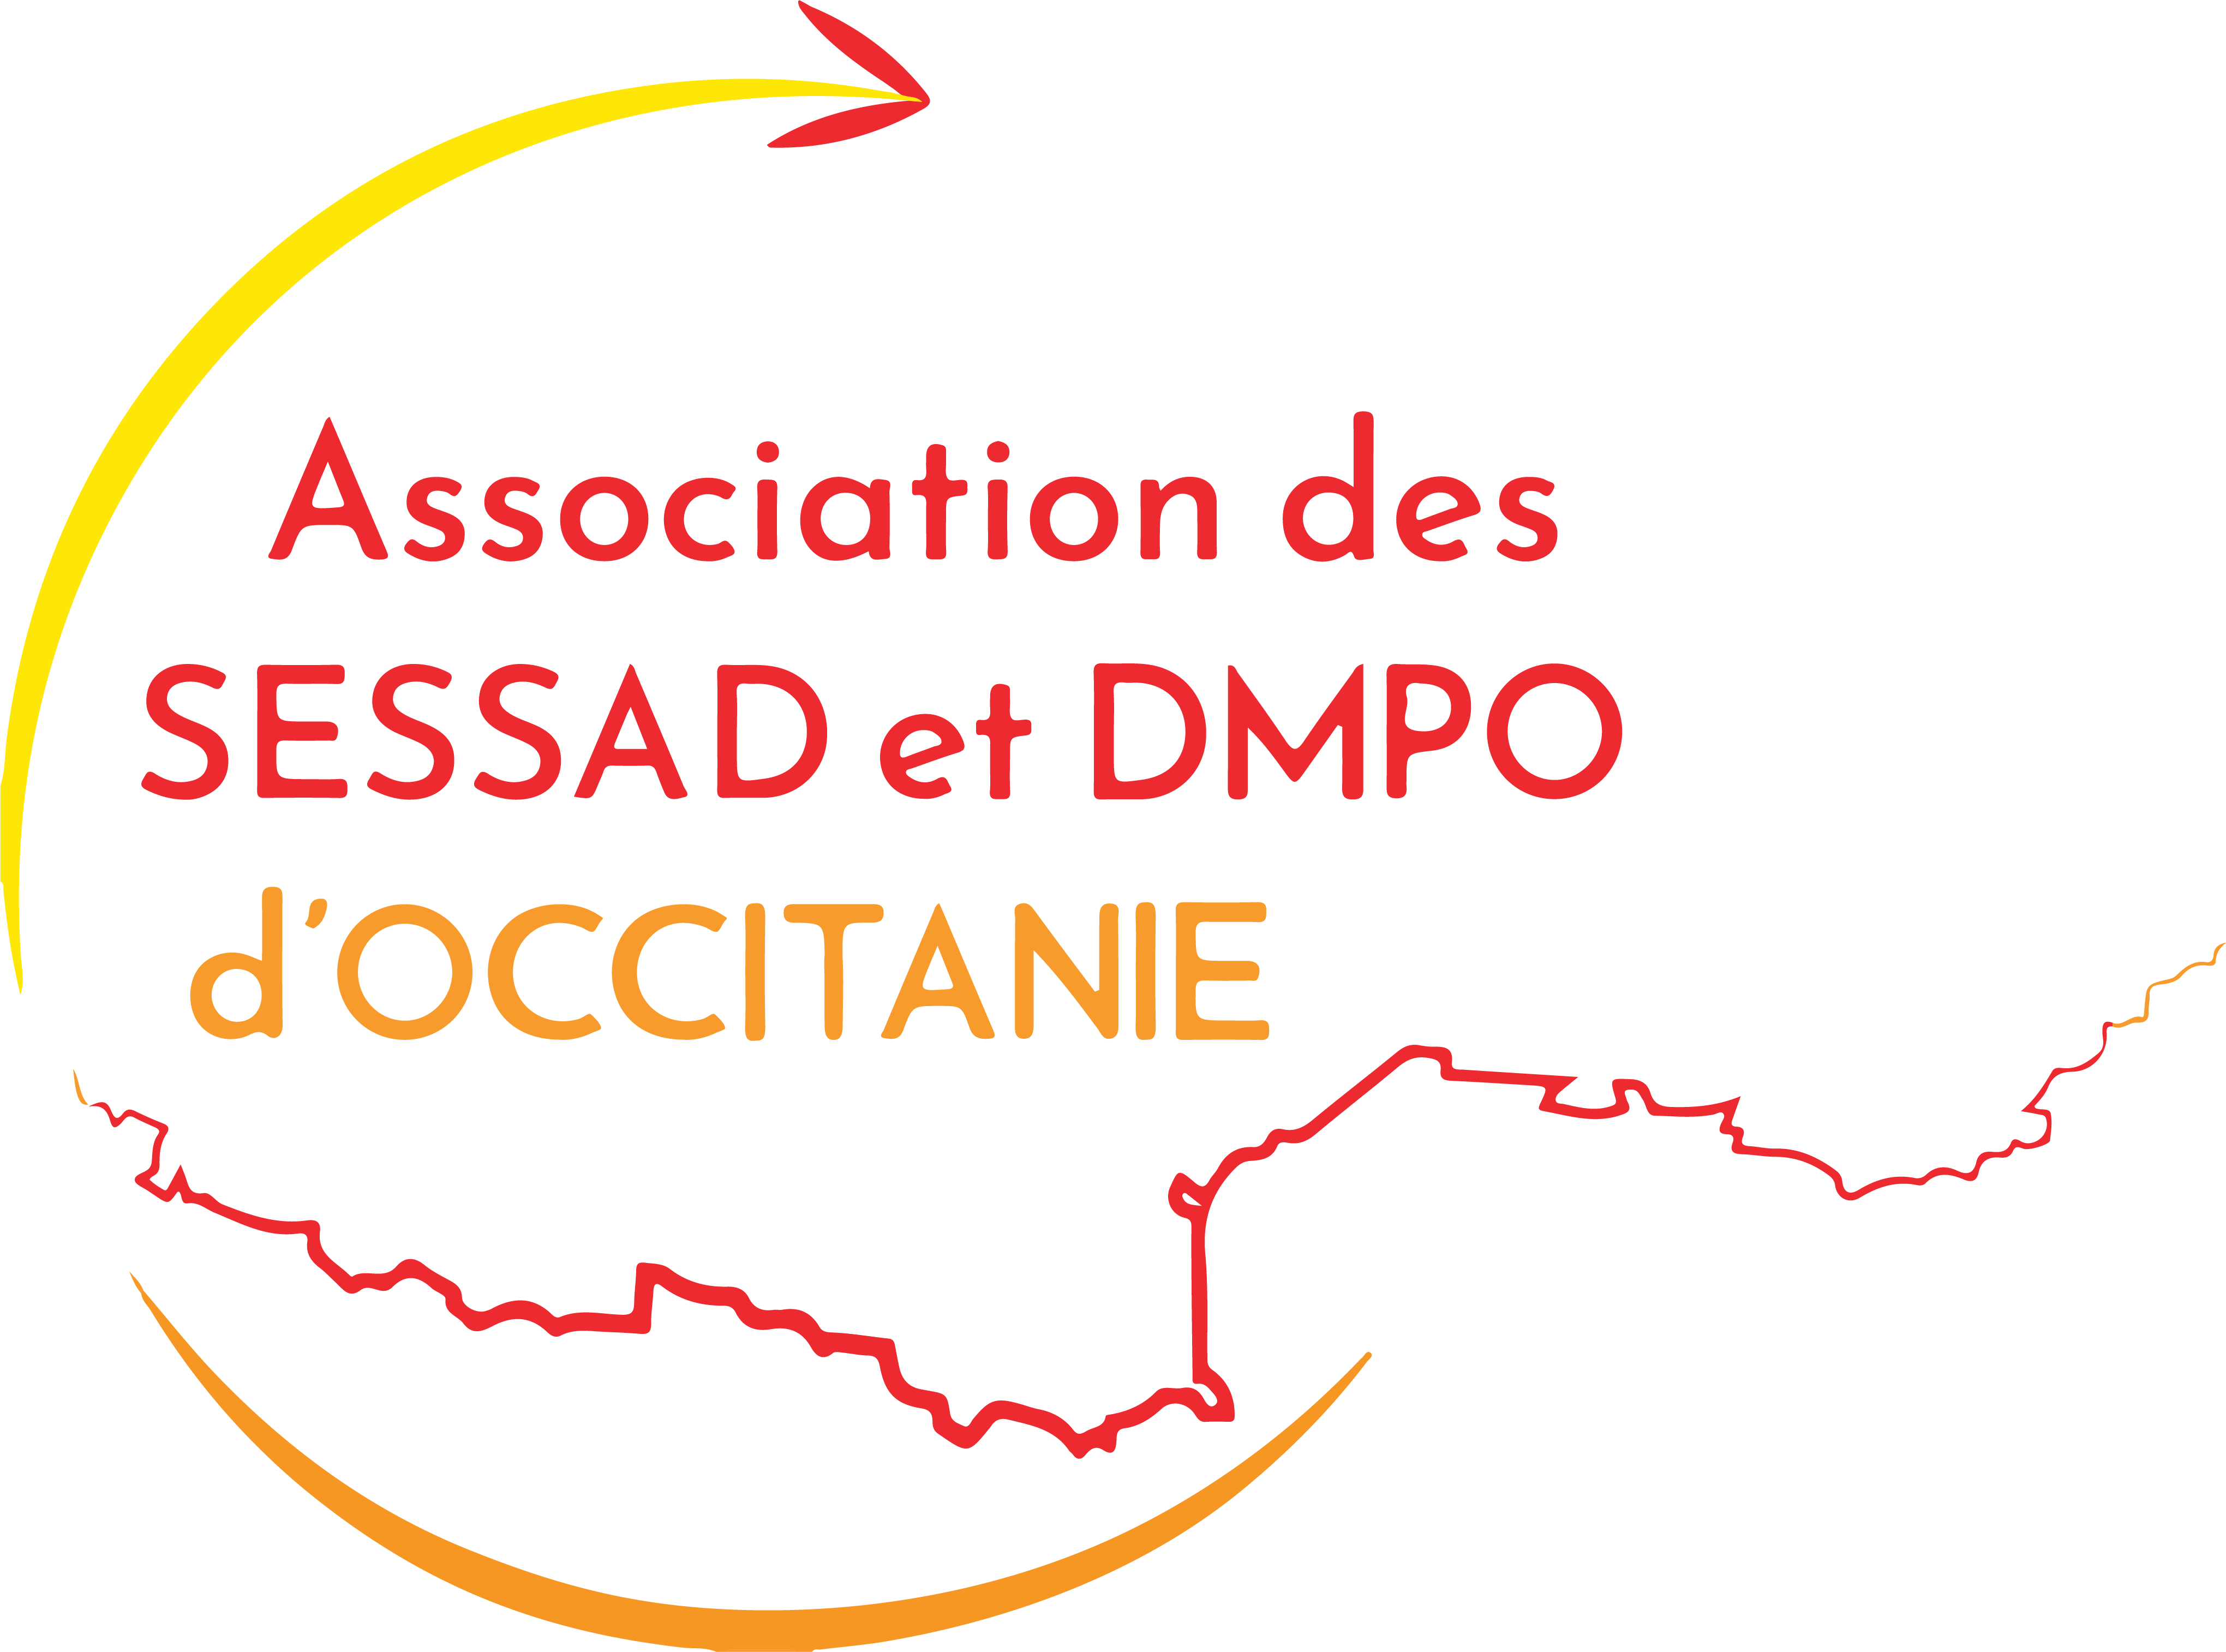 Association des SESSAD d'Occitanie / Pyrénées – Méditerranée Logo